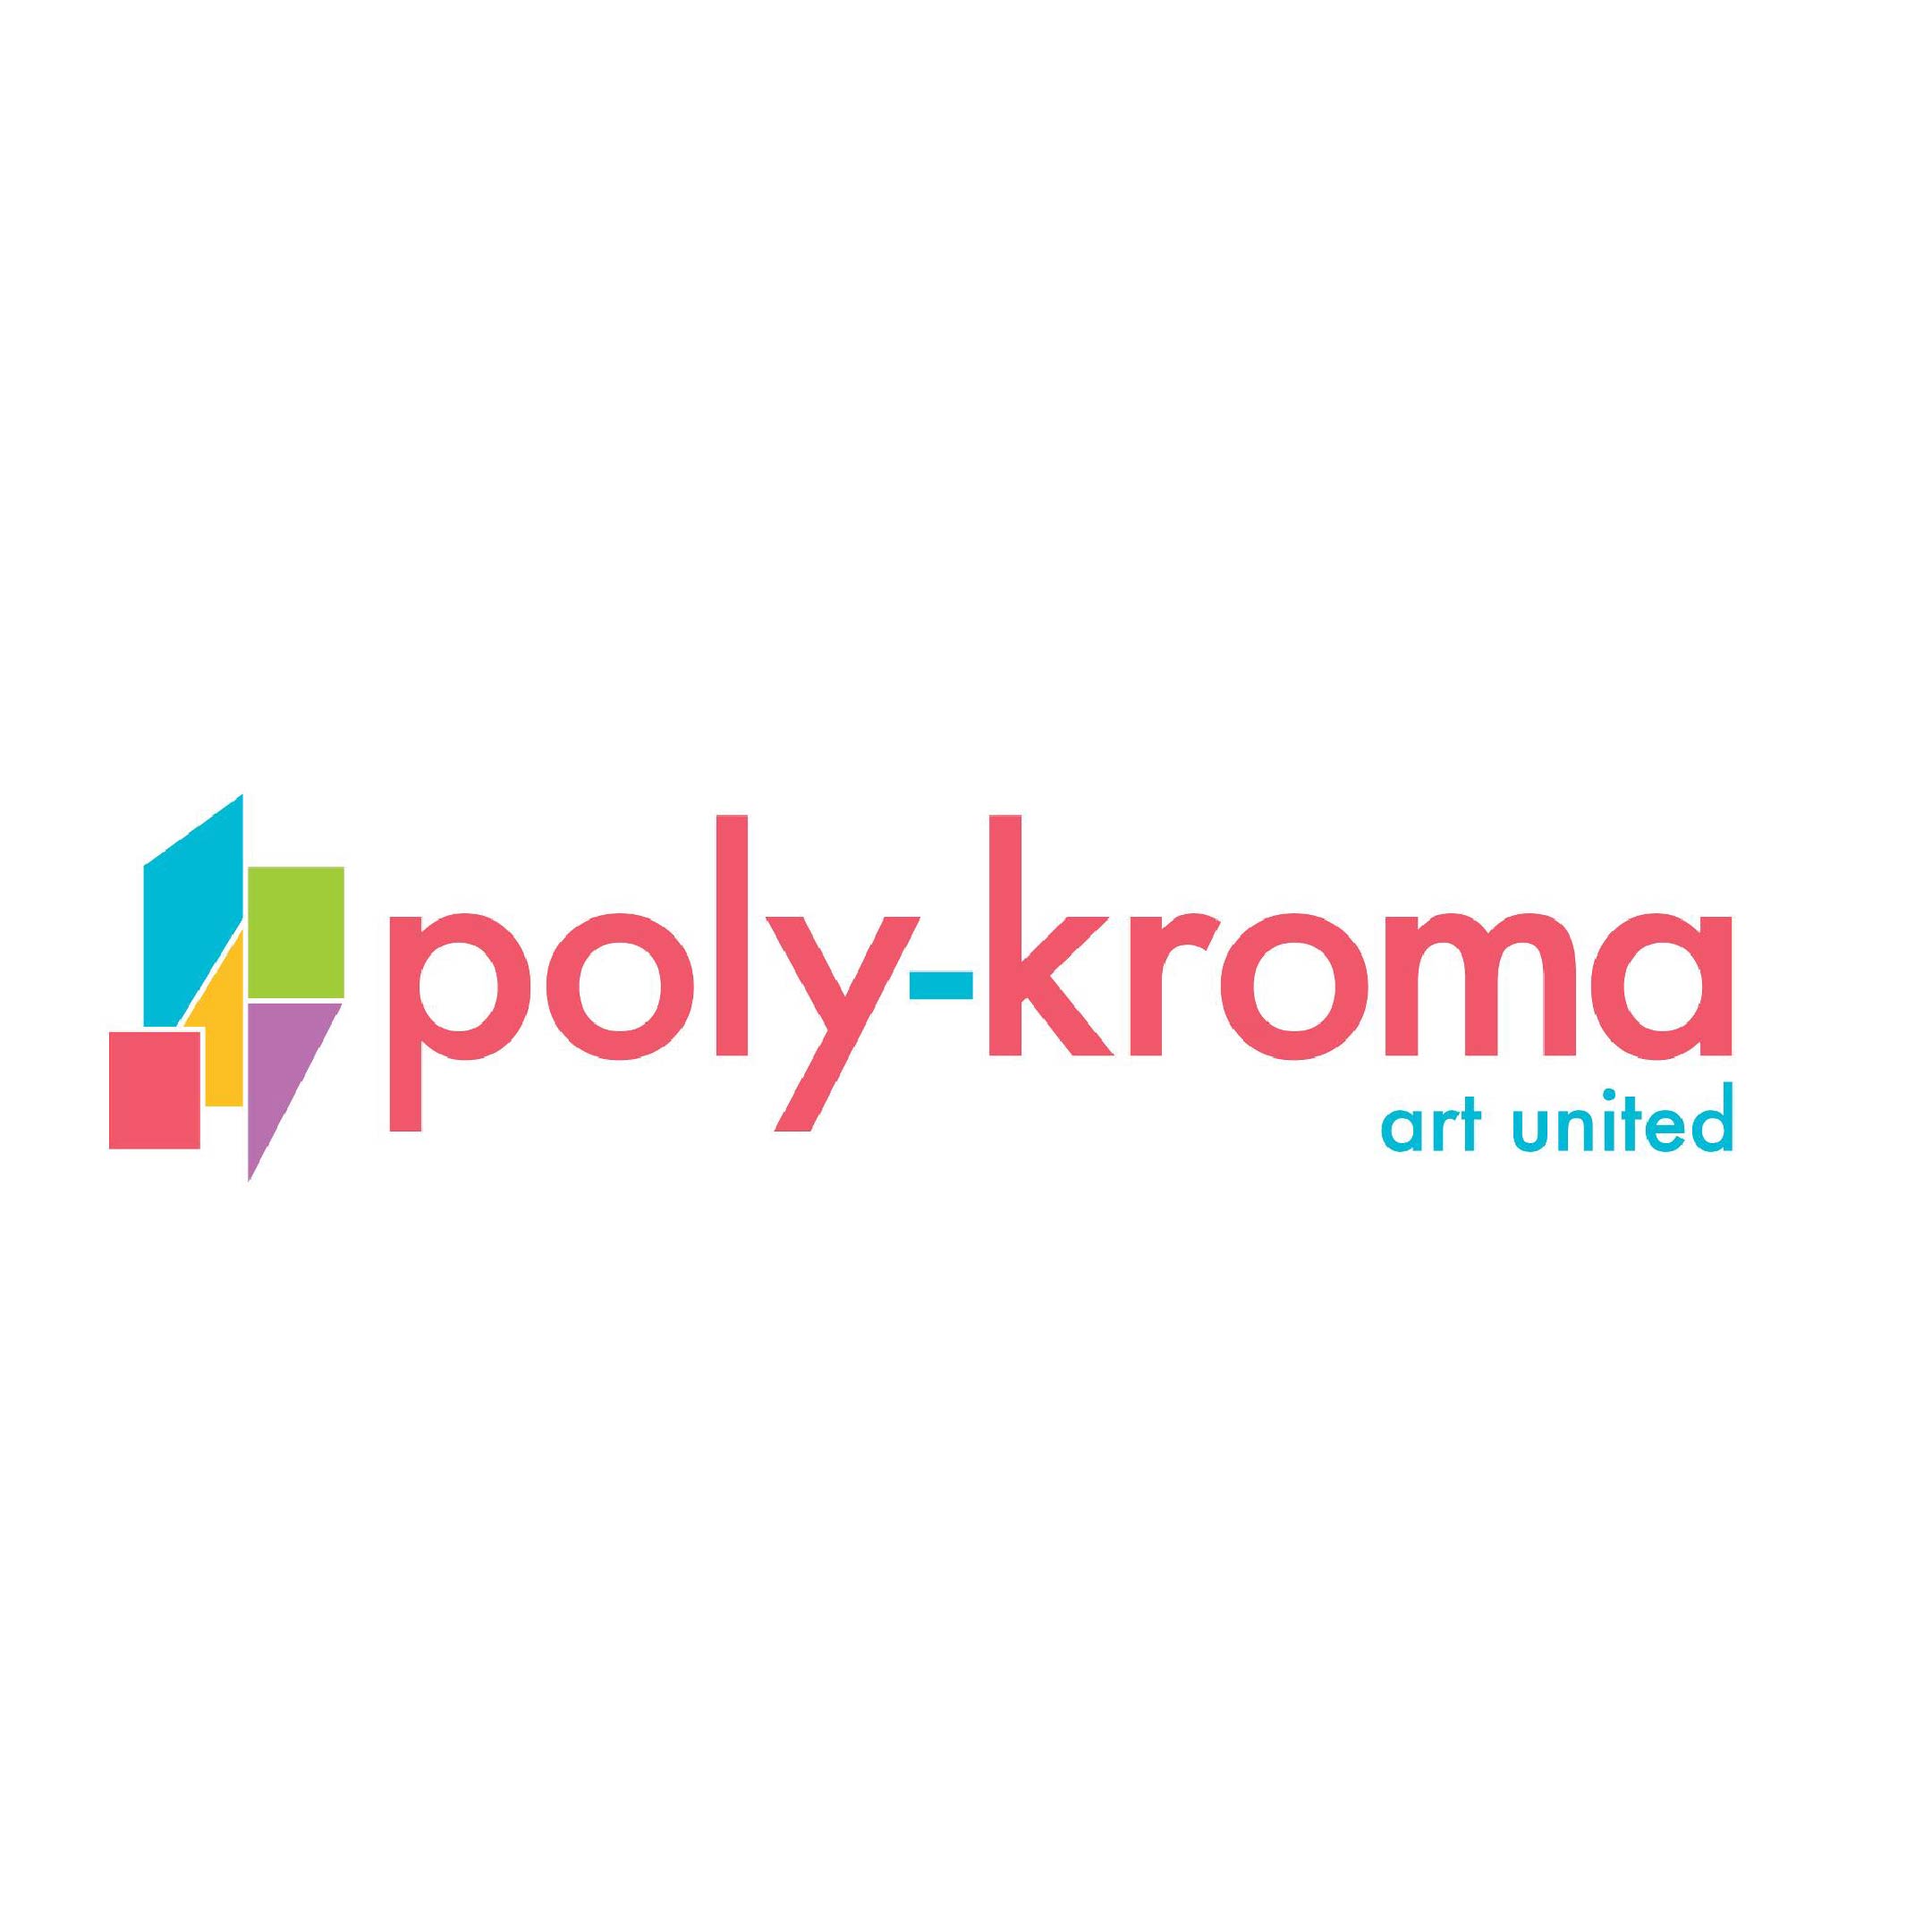 PolyKroma